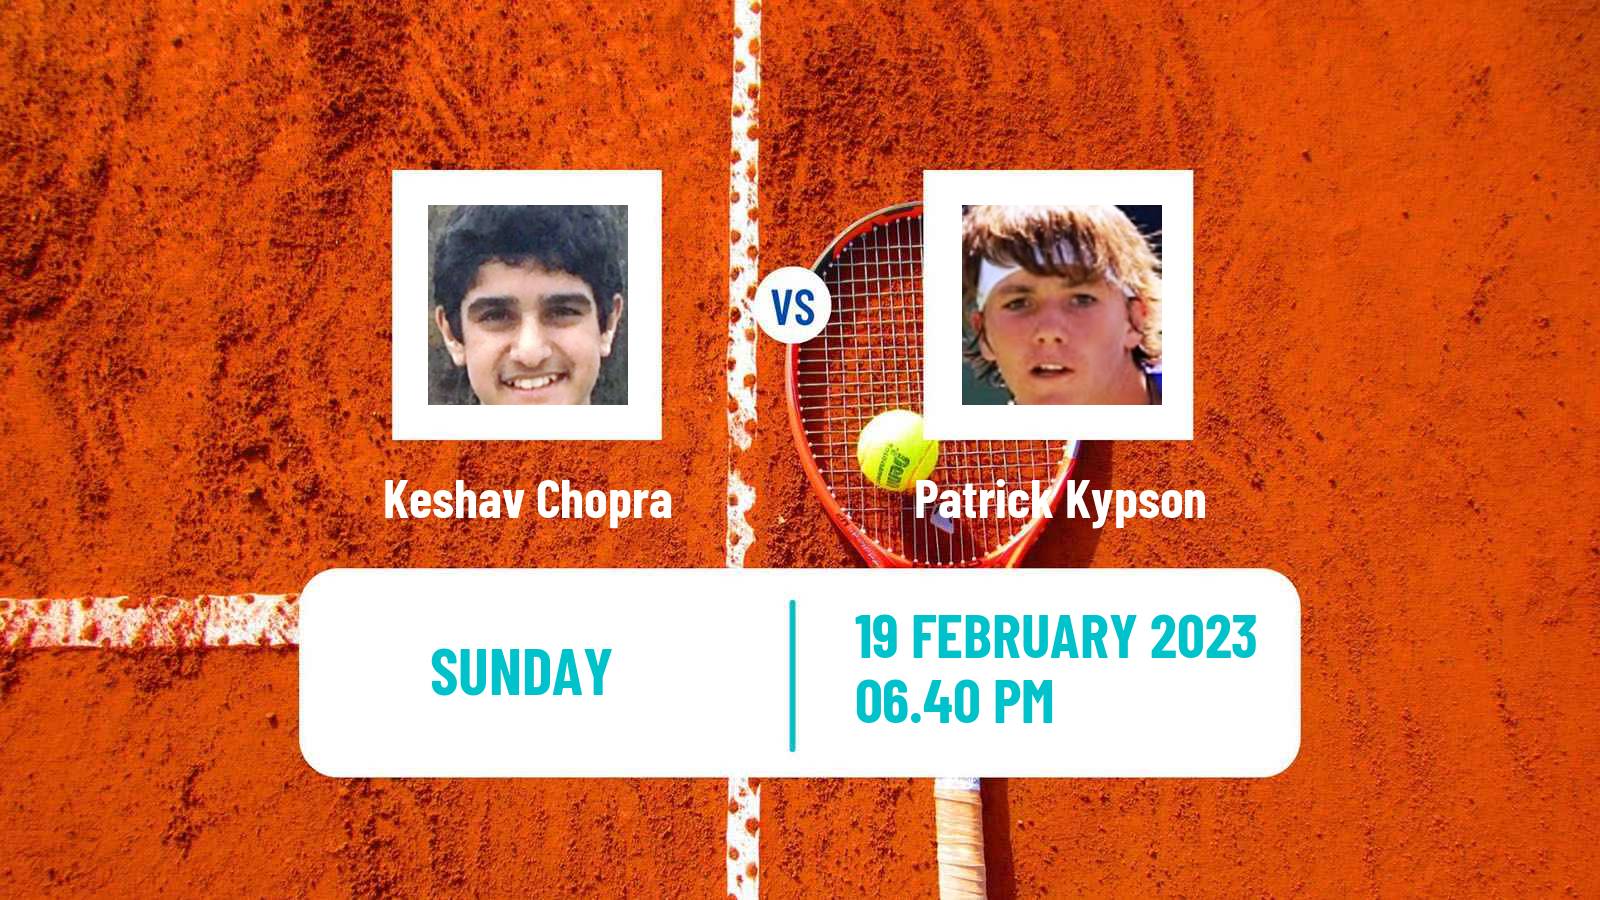 Tennis ATP Challenger Keshav Chopra - Patrick Kypson